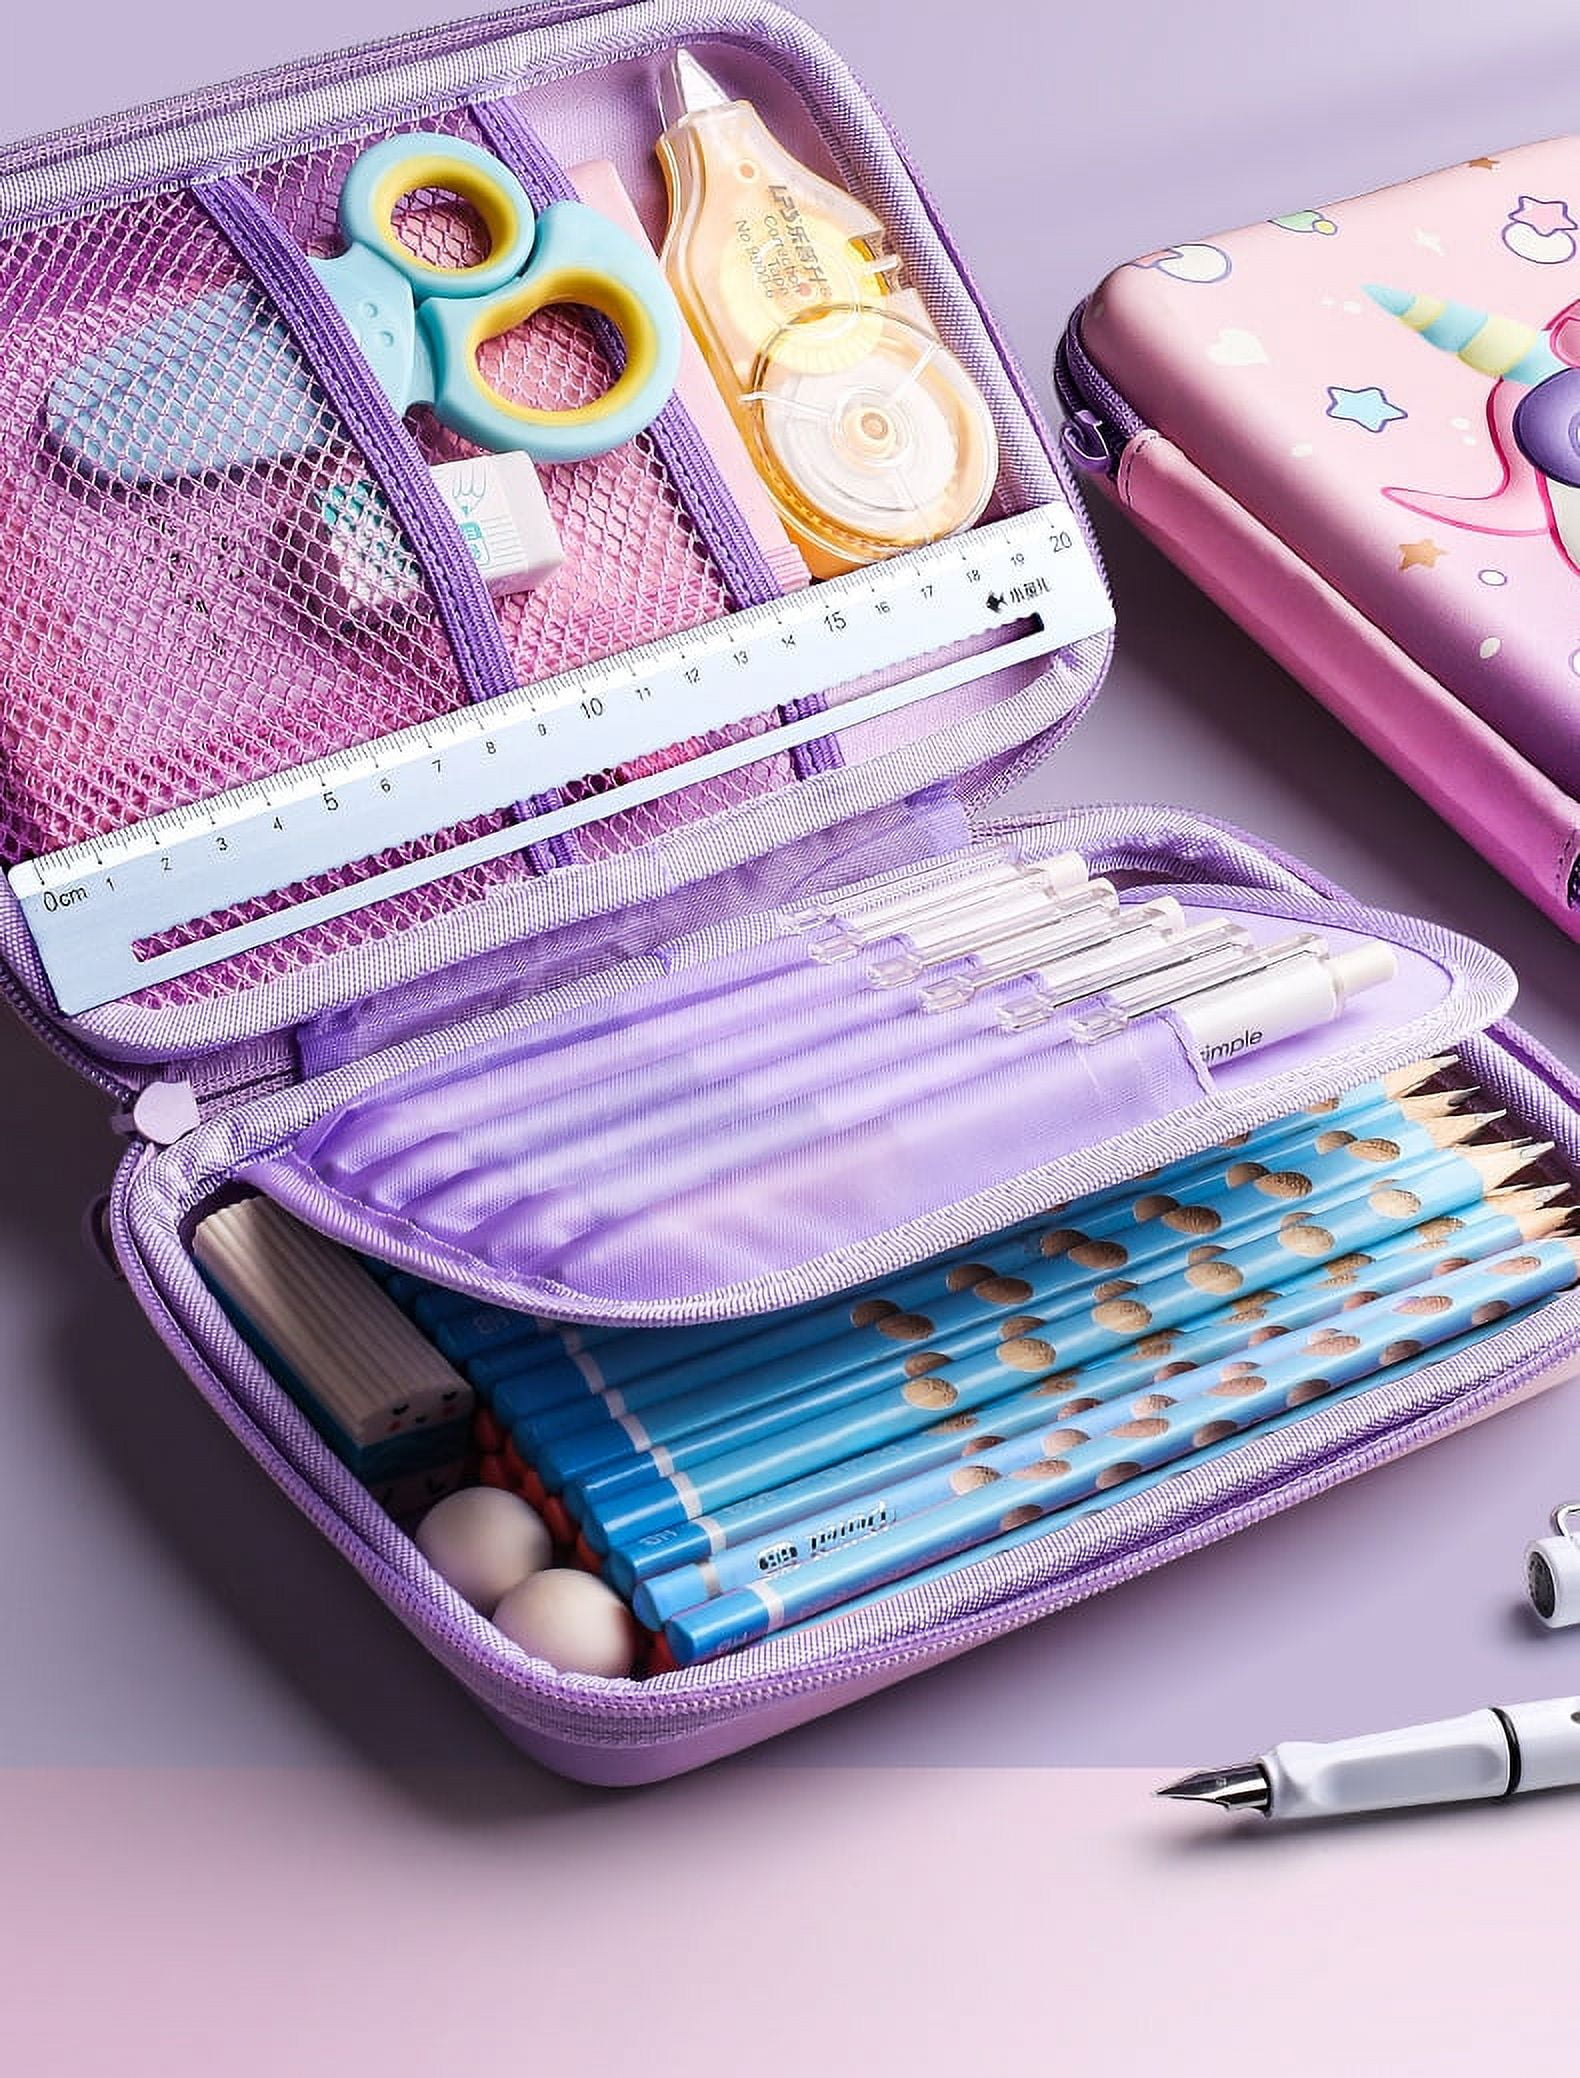 Zentric Pencil Pouch Cute Doll Pencil Case For Kids Art EVA  Pencil Box 